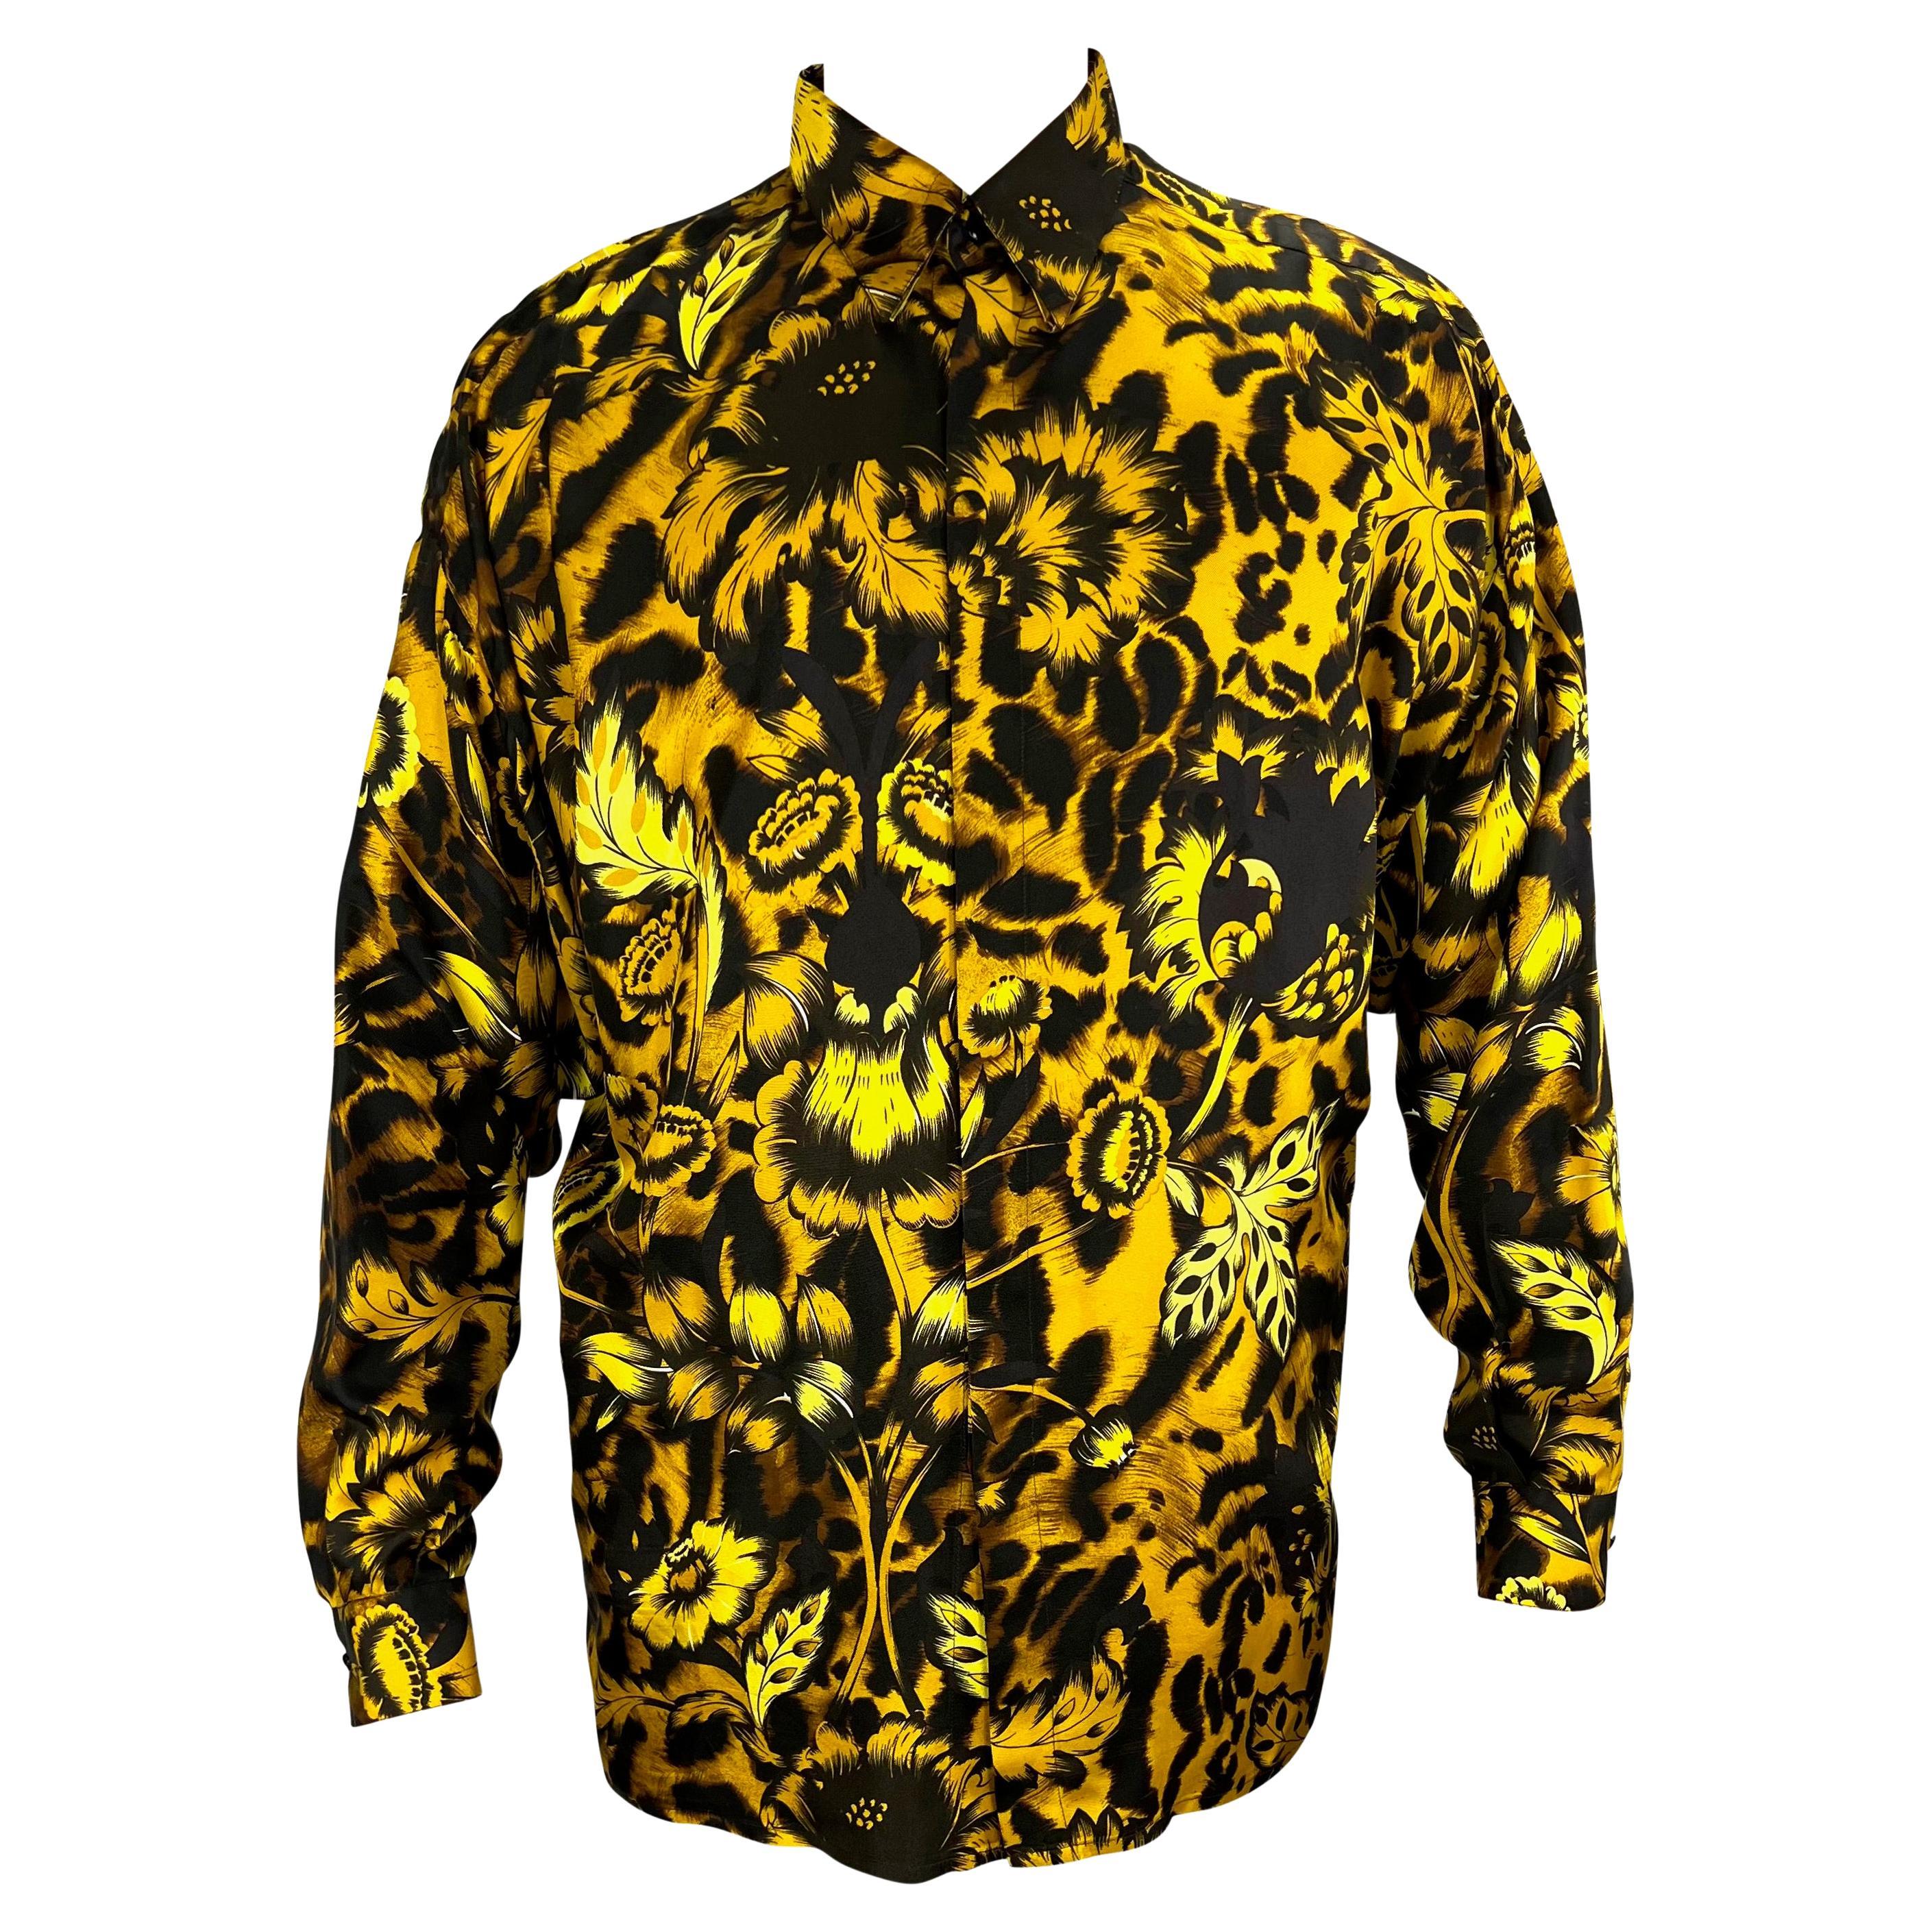 1993 Gianni Versace Gold Animal Print Floral Silk Men's Button Up